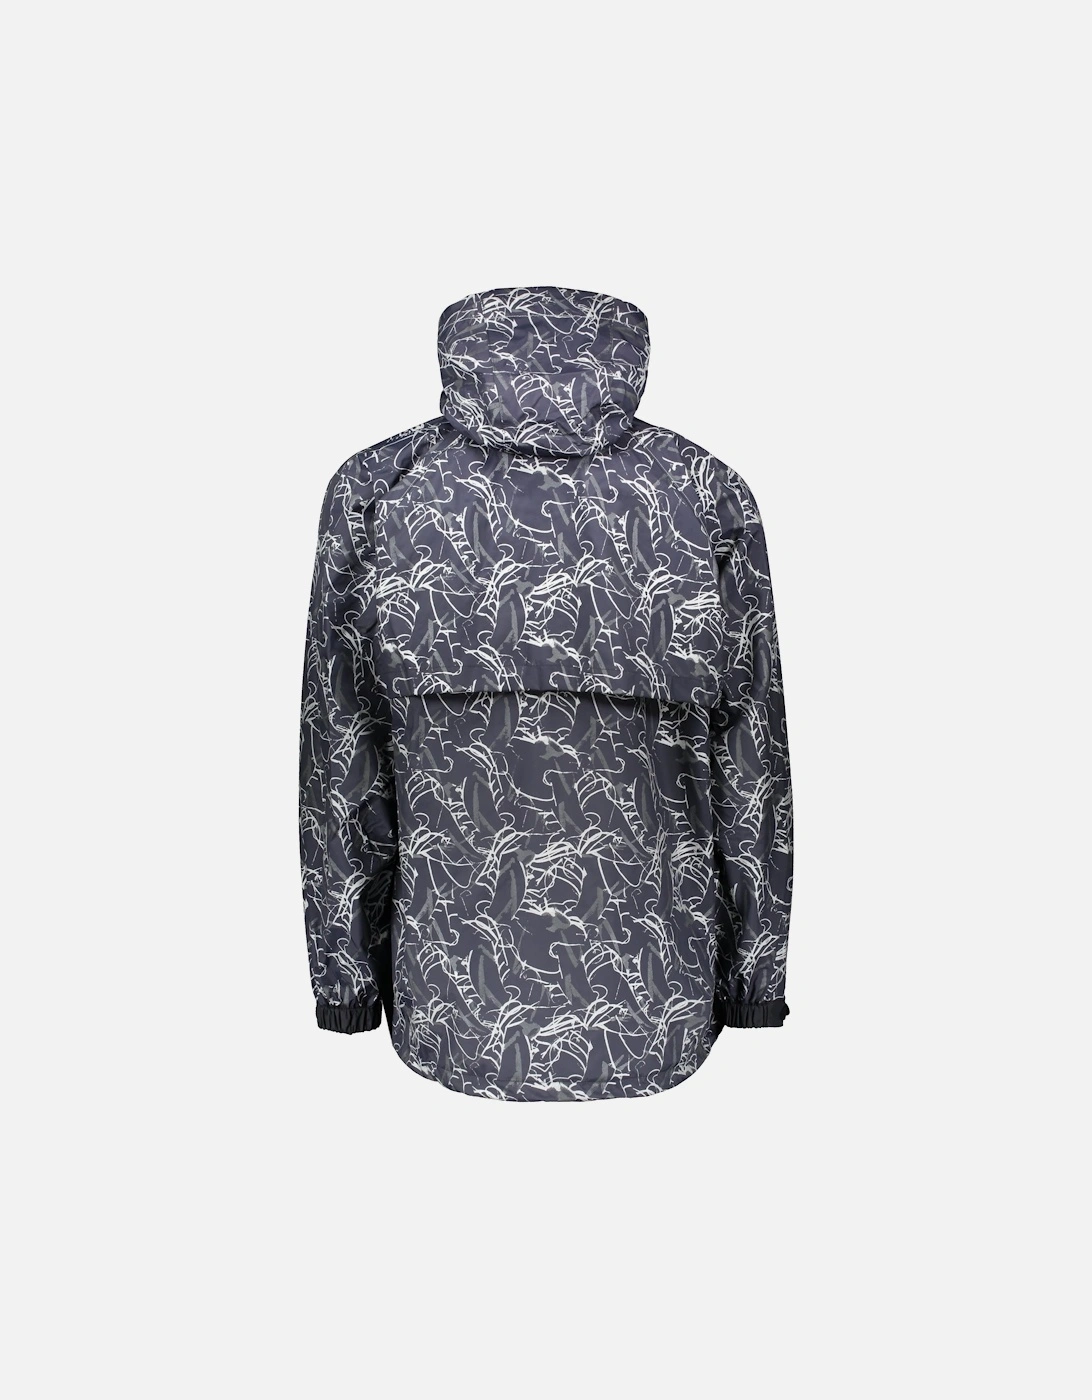 Reflective Printed Rain Jacket - Charcoal